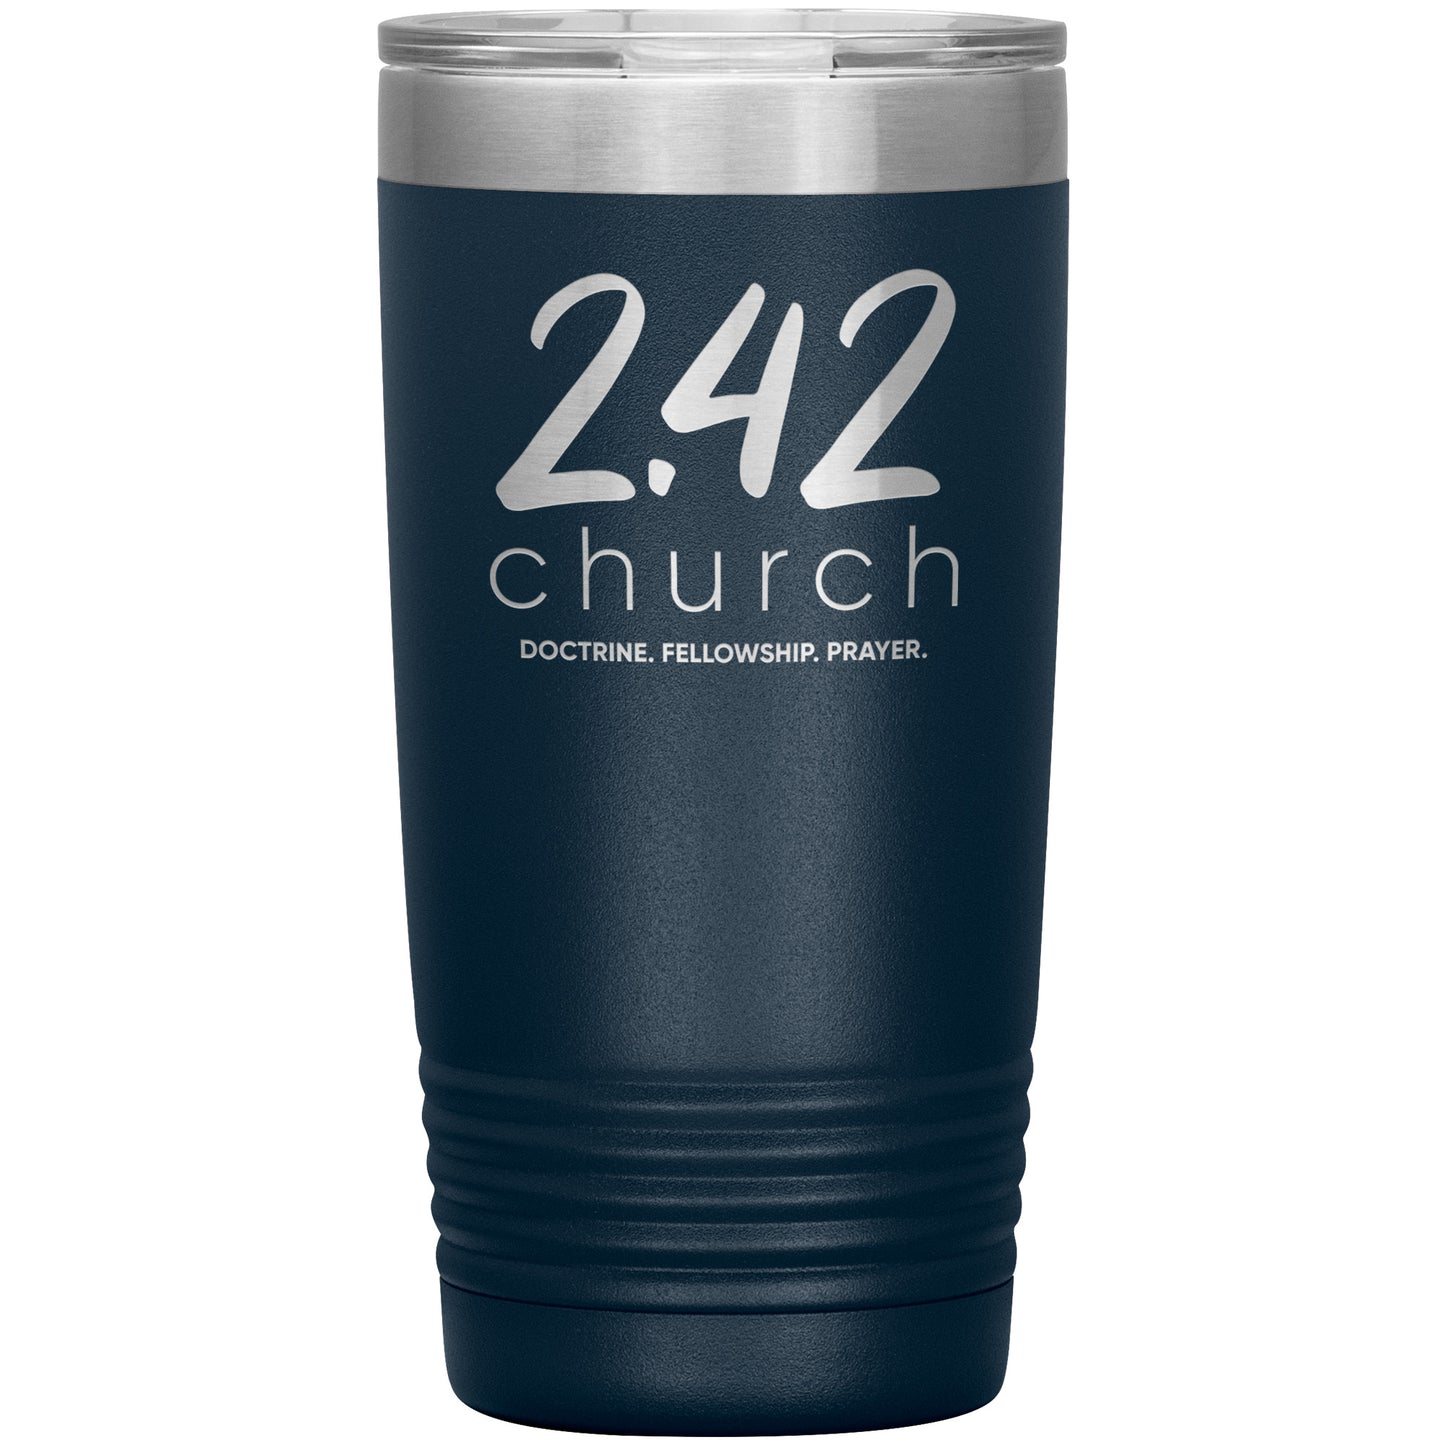 2.42 Church Insulated Tumblers